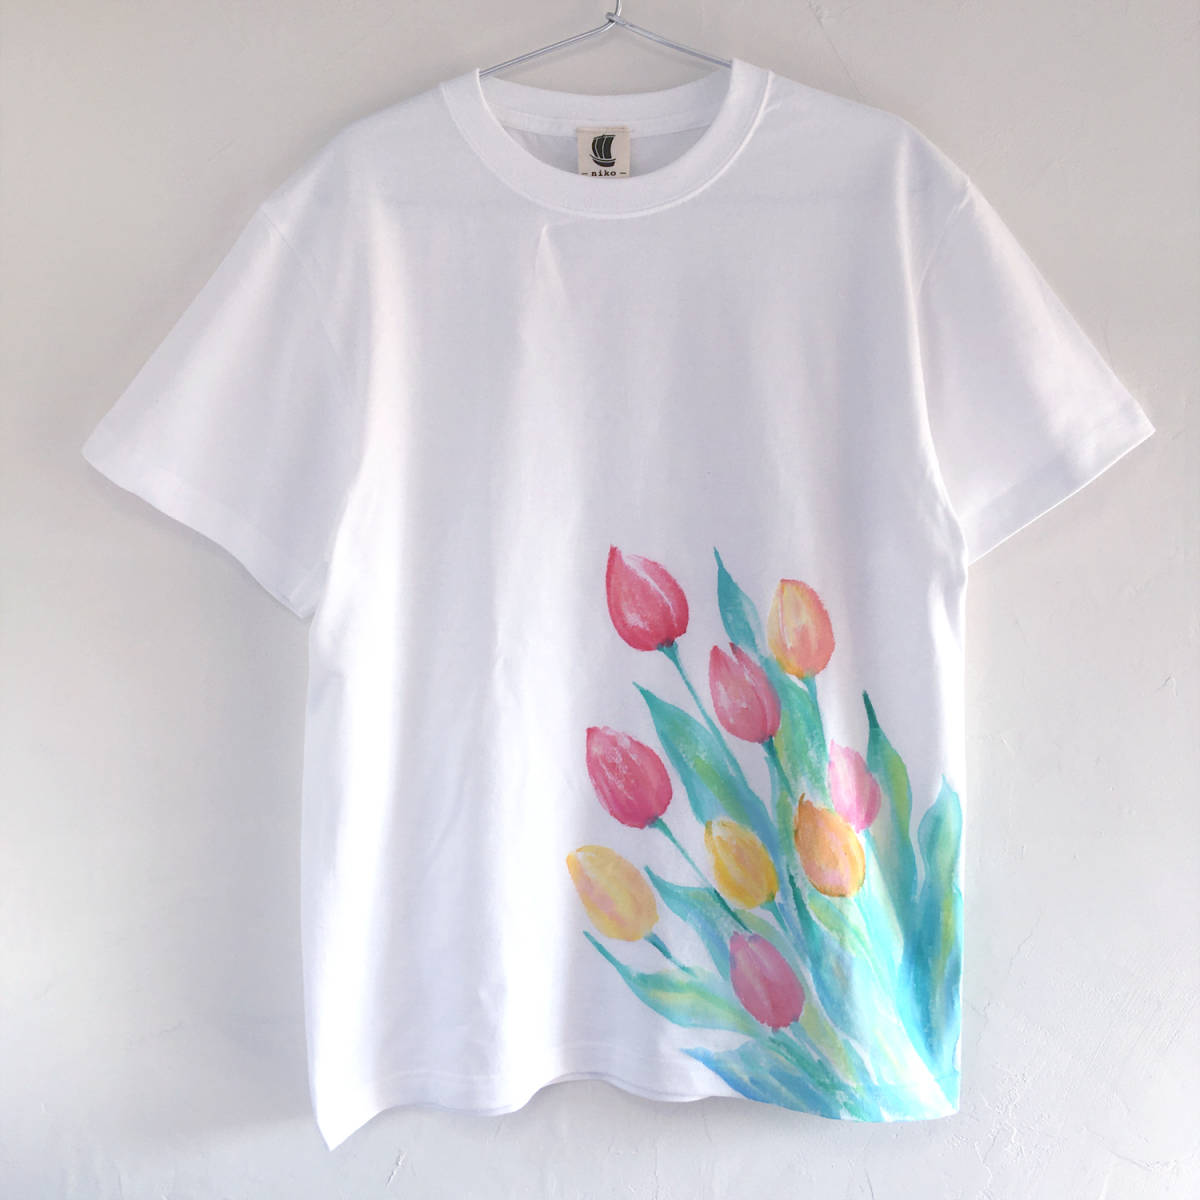 Tulip pattern T-shirt Men's size M Hand-drawn tulip floral T-shirt, Medium size, Crew neck, Patterned